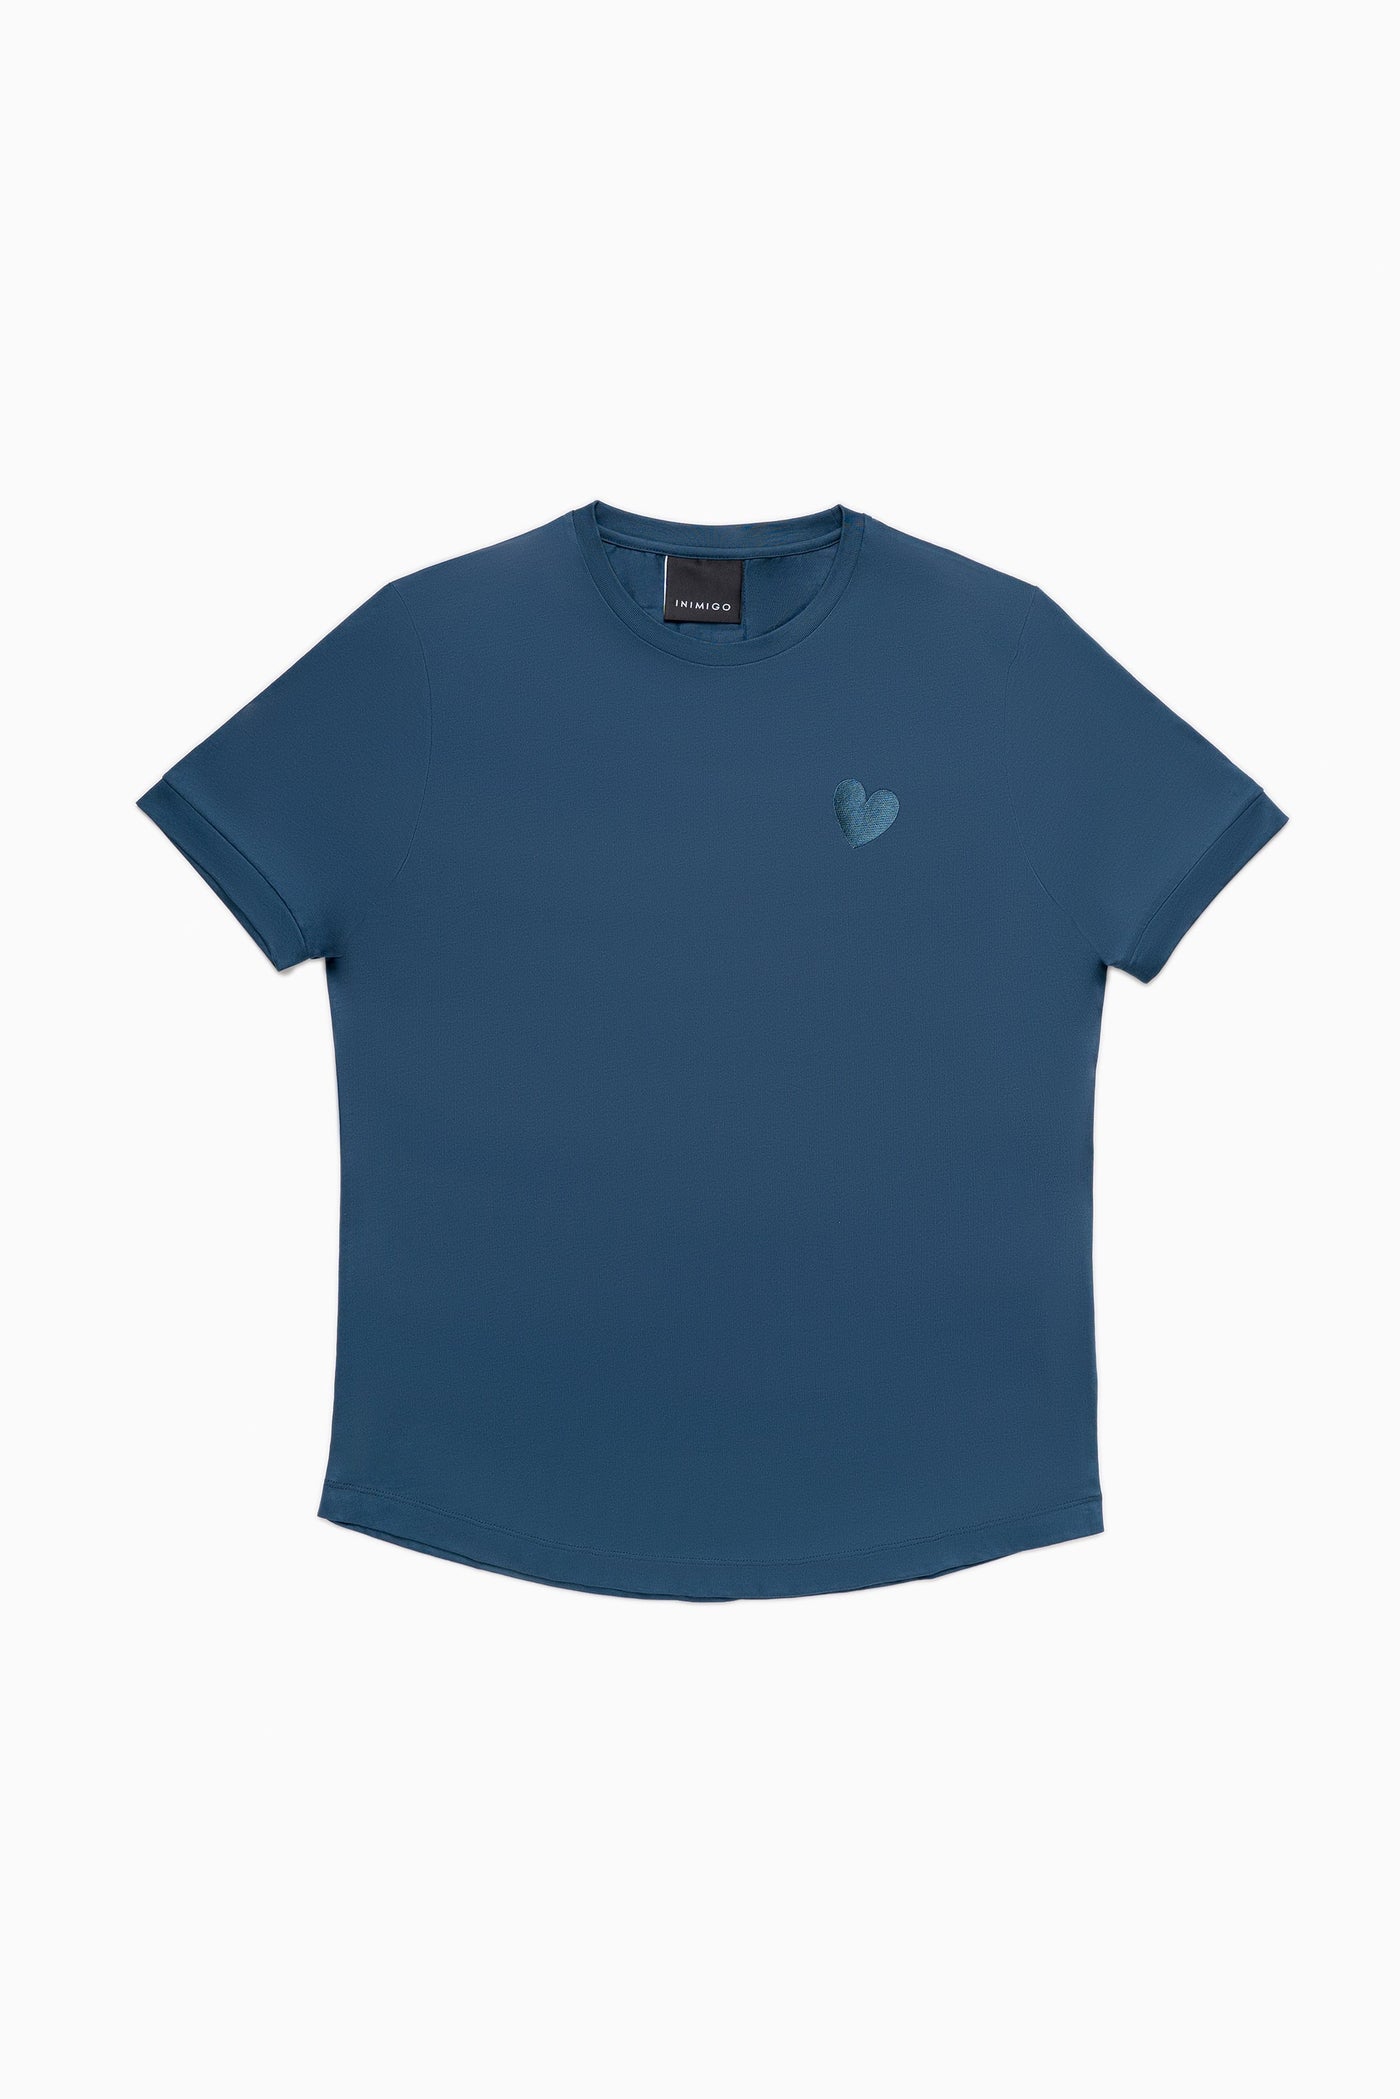 Classic Embroidery Heart Stargazer Blue T-shirt